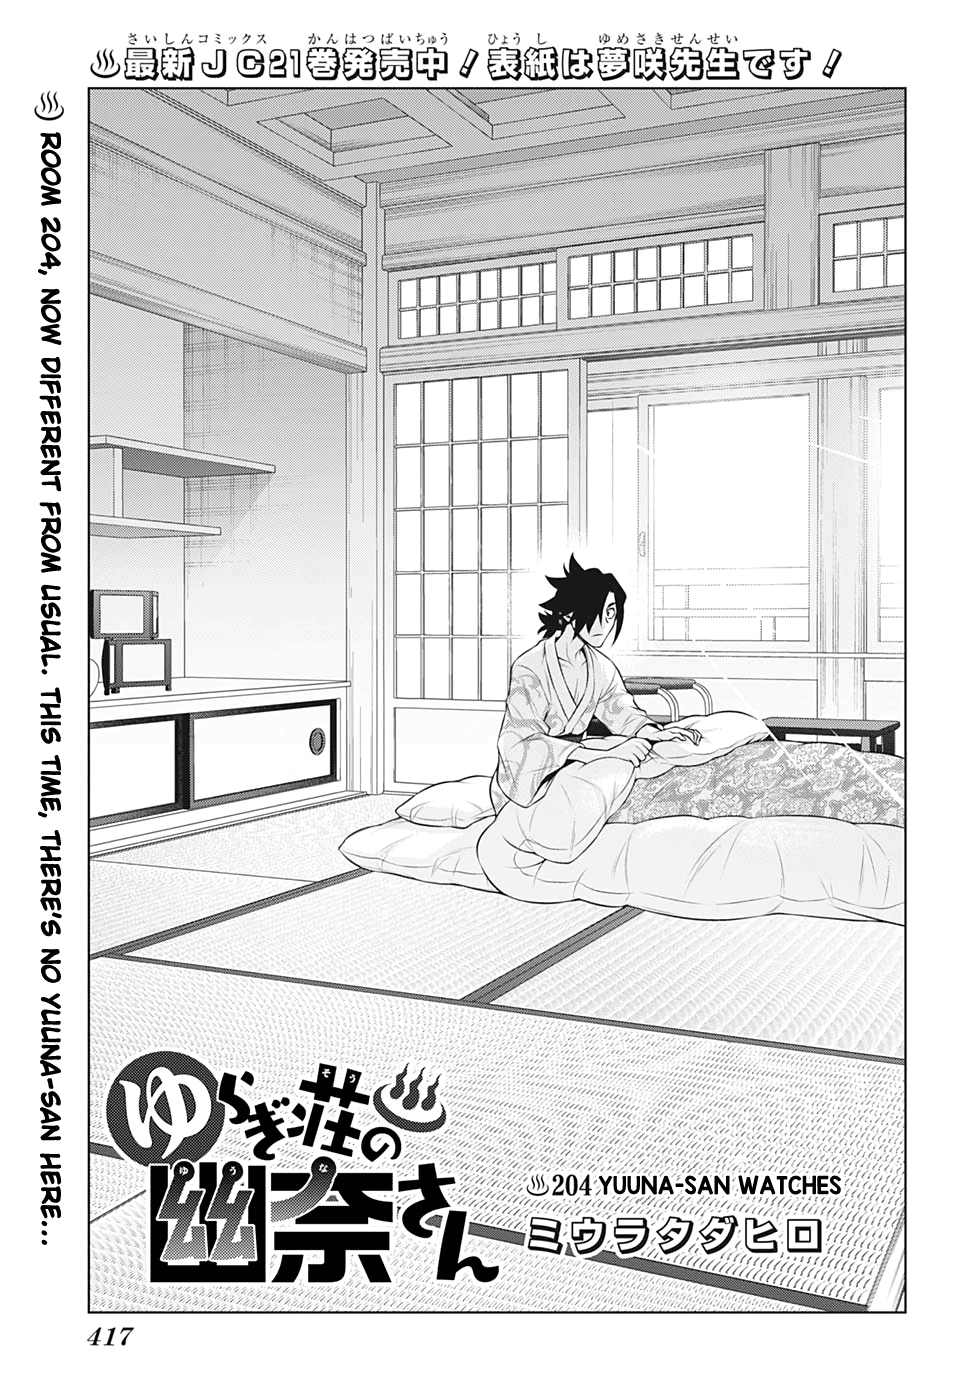 Yuragi-Sou No Yuuna-San Vol.24 Chapter 204: Yuuna-San Watches - Picture 1